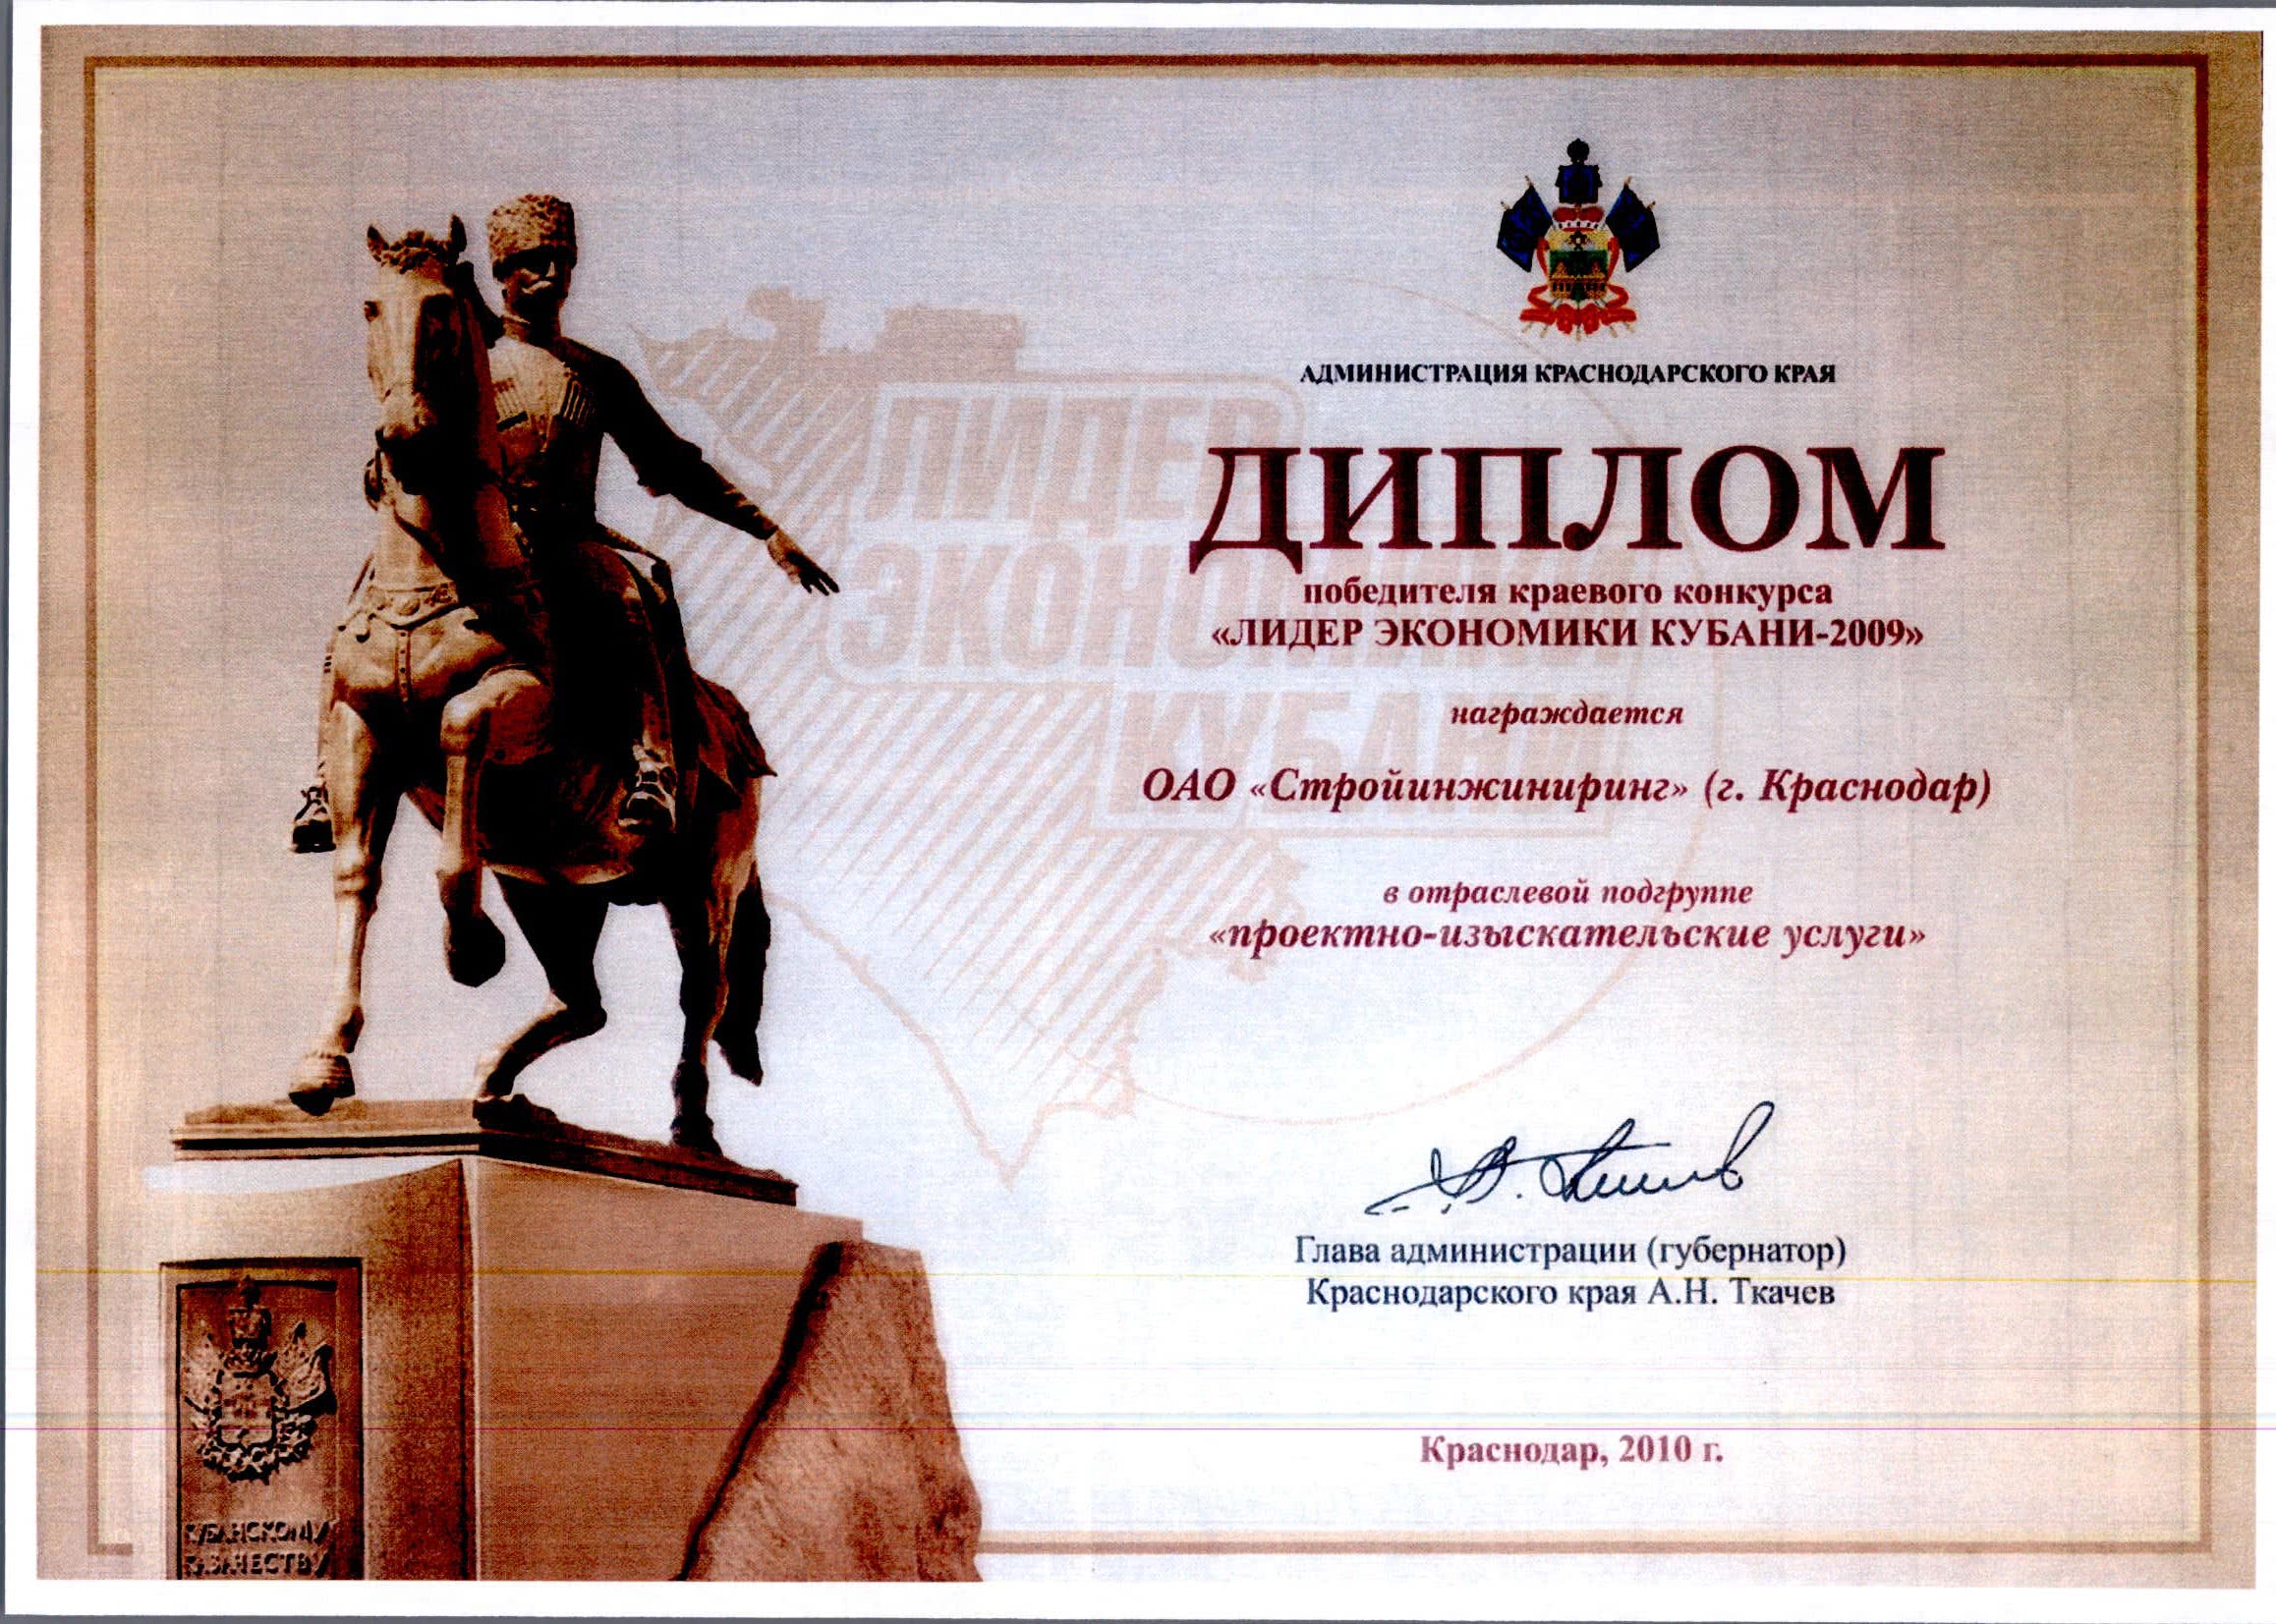 Лидер экономики Кубани-2009